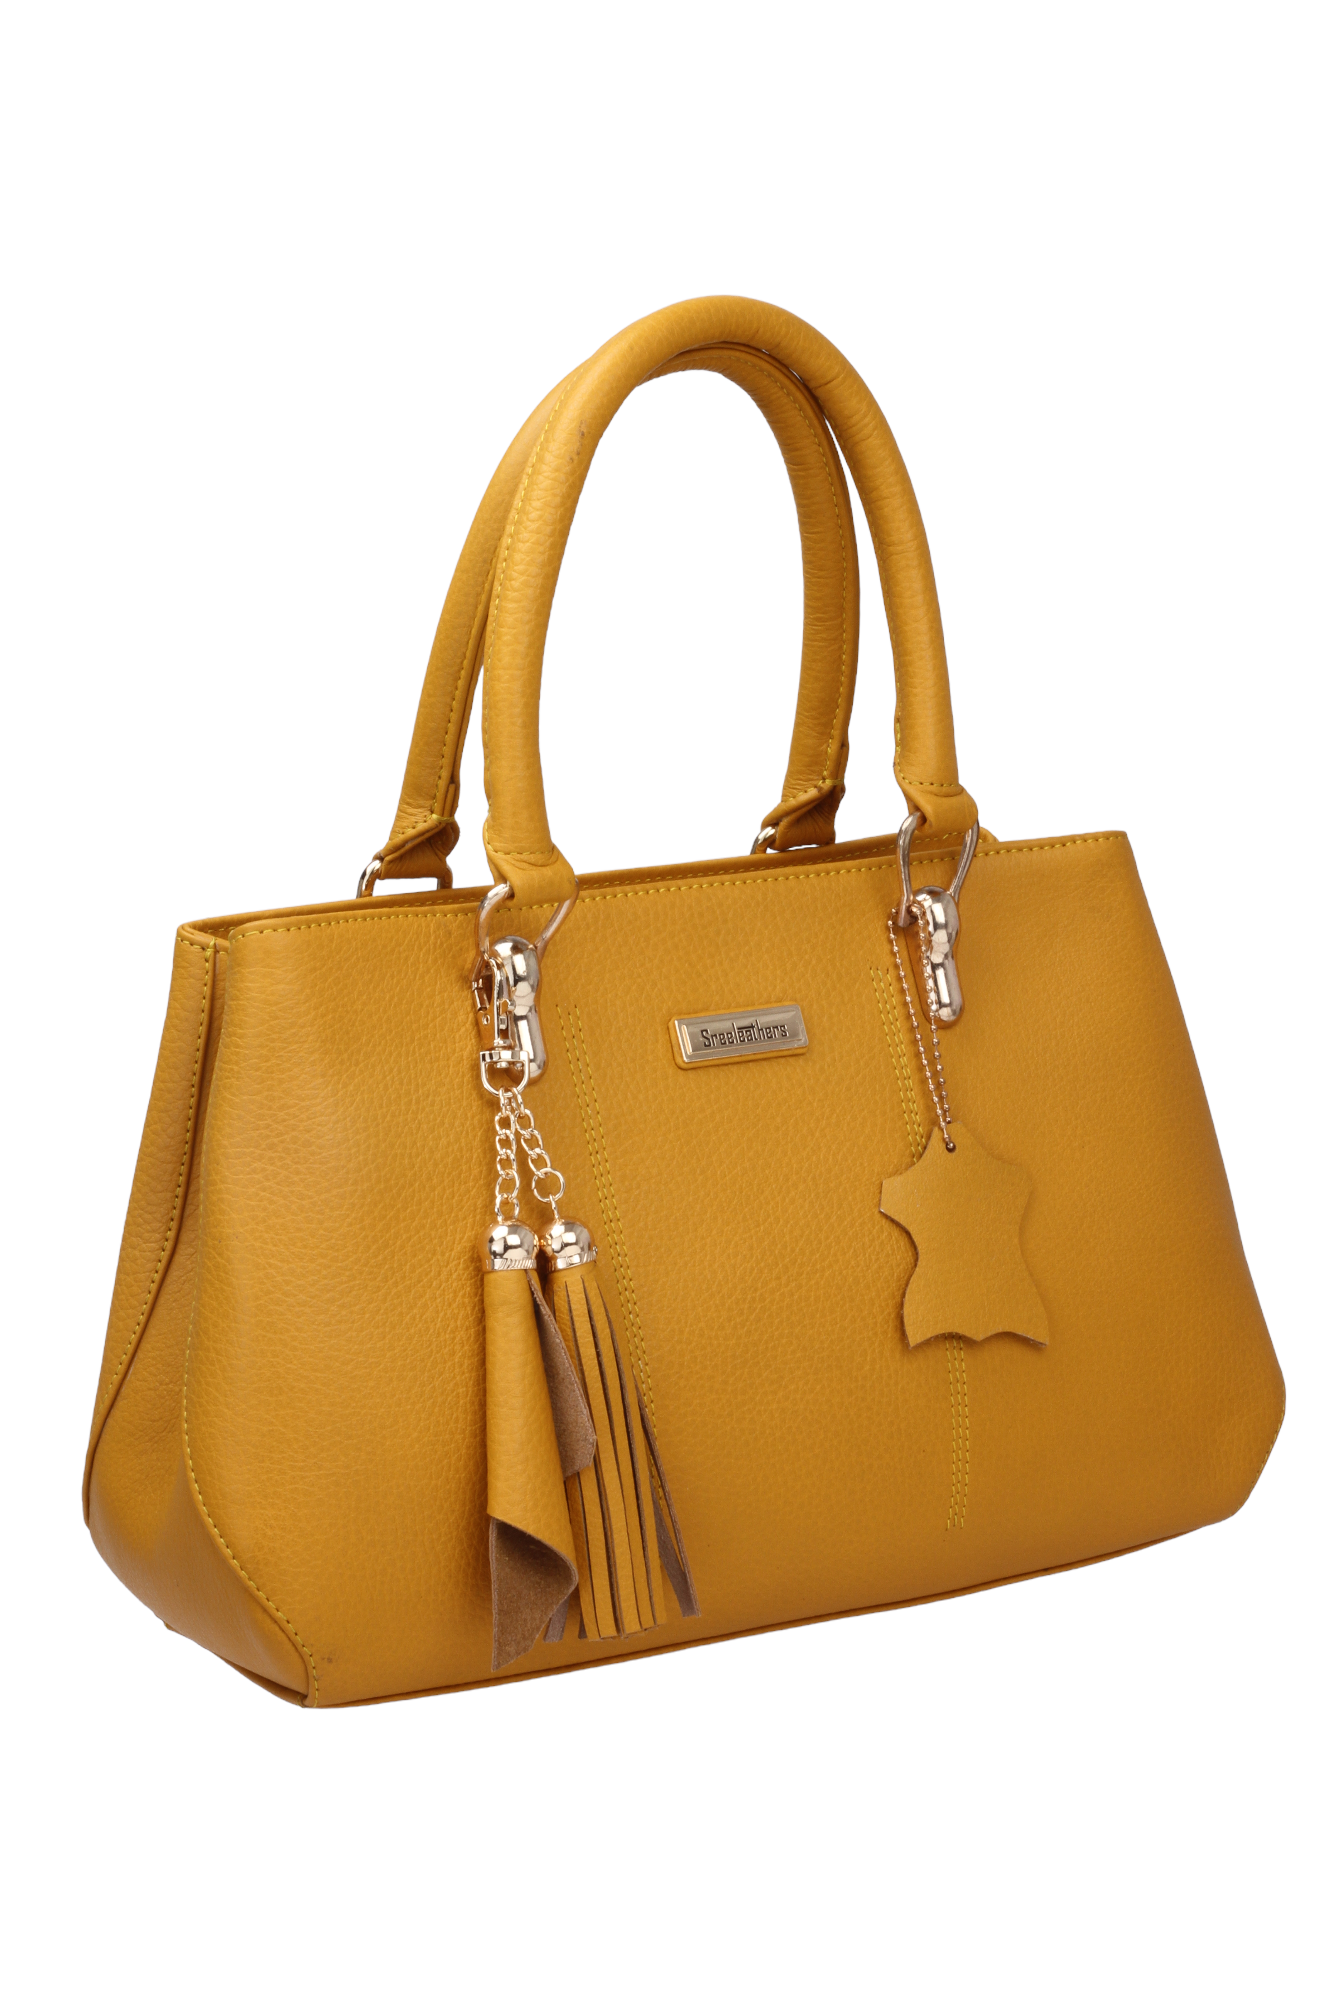 SSI Pure Ladies Stylish Leather Bags at Rs 1200 in Kolkata | ID: 13691497391